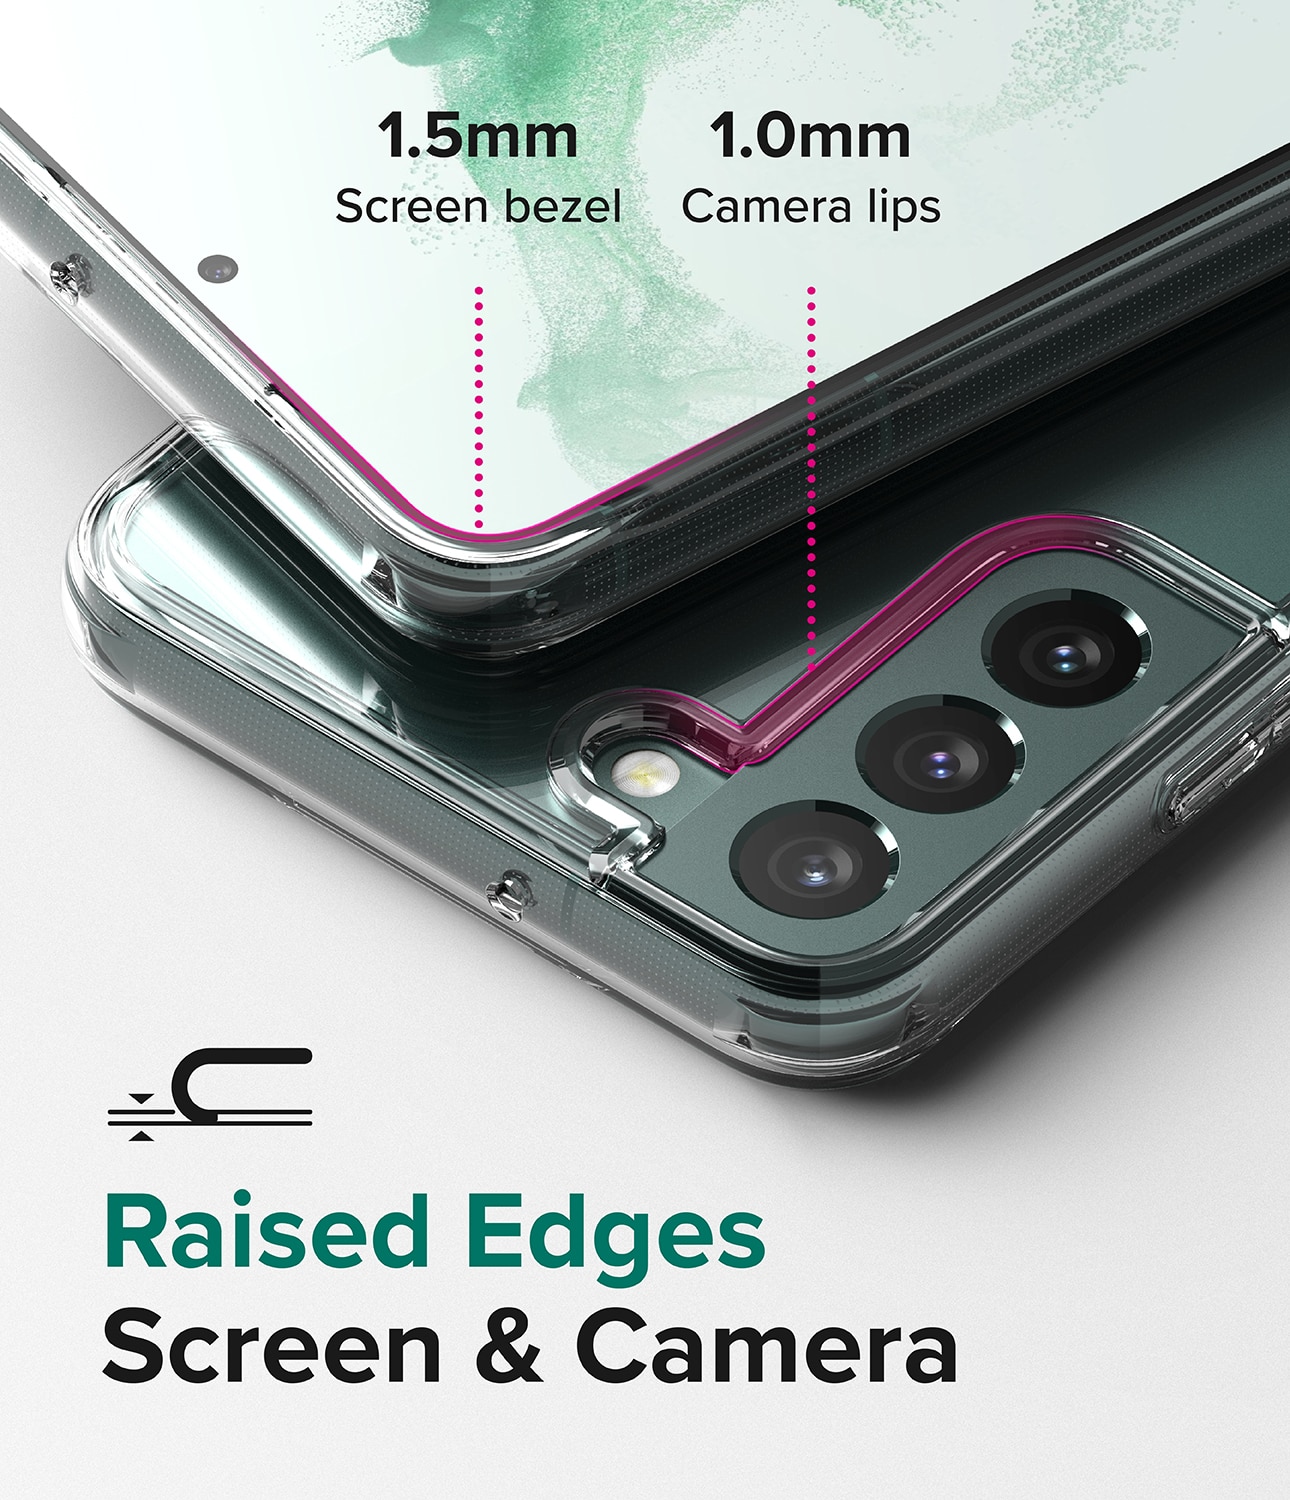 Samsung Galaxy S22 Plus Fusion Case Clear